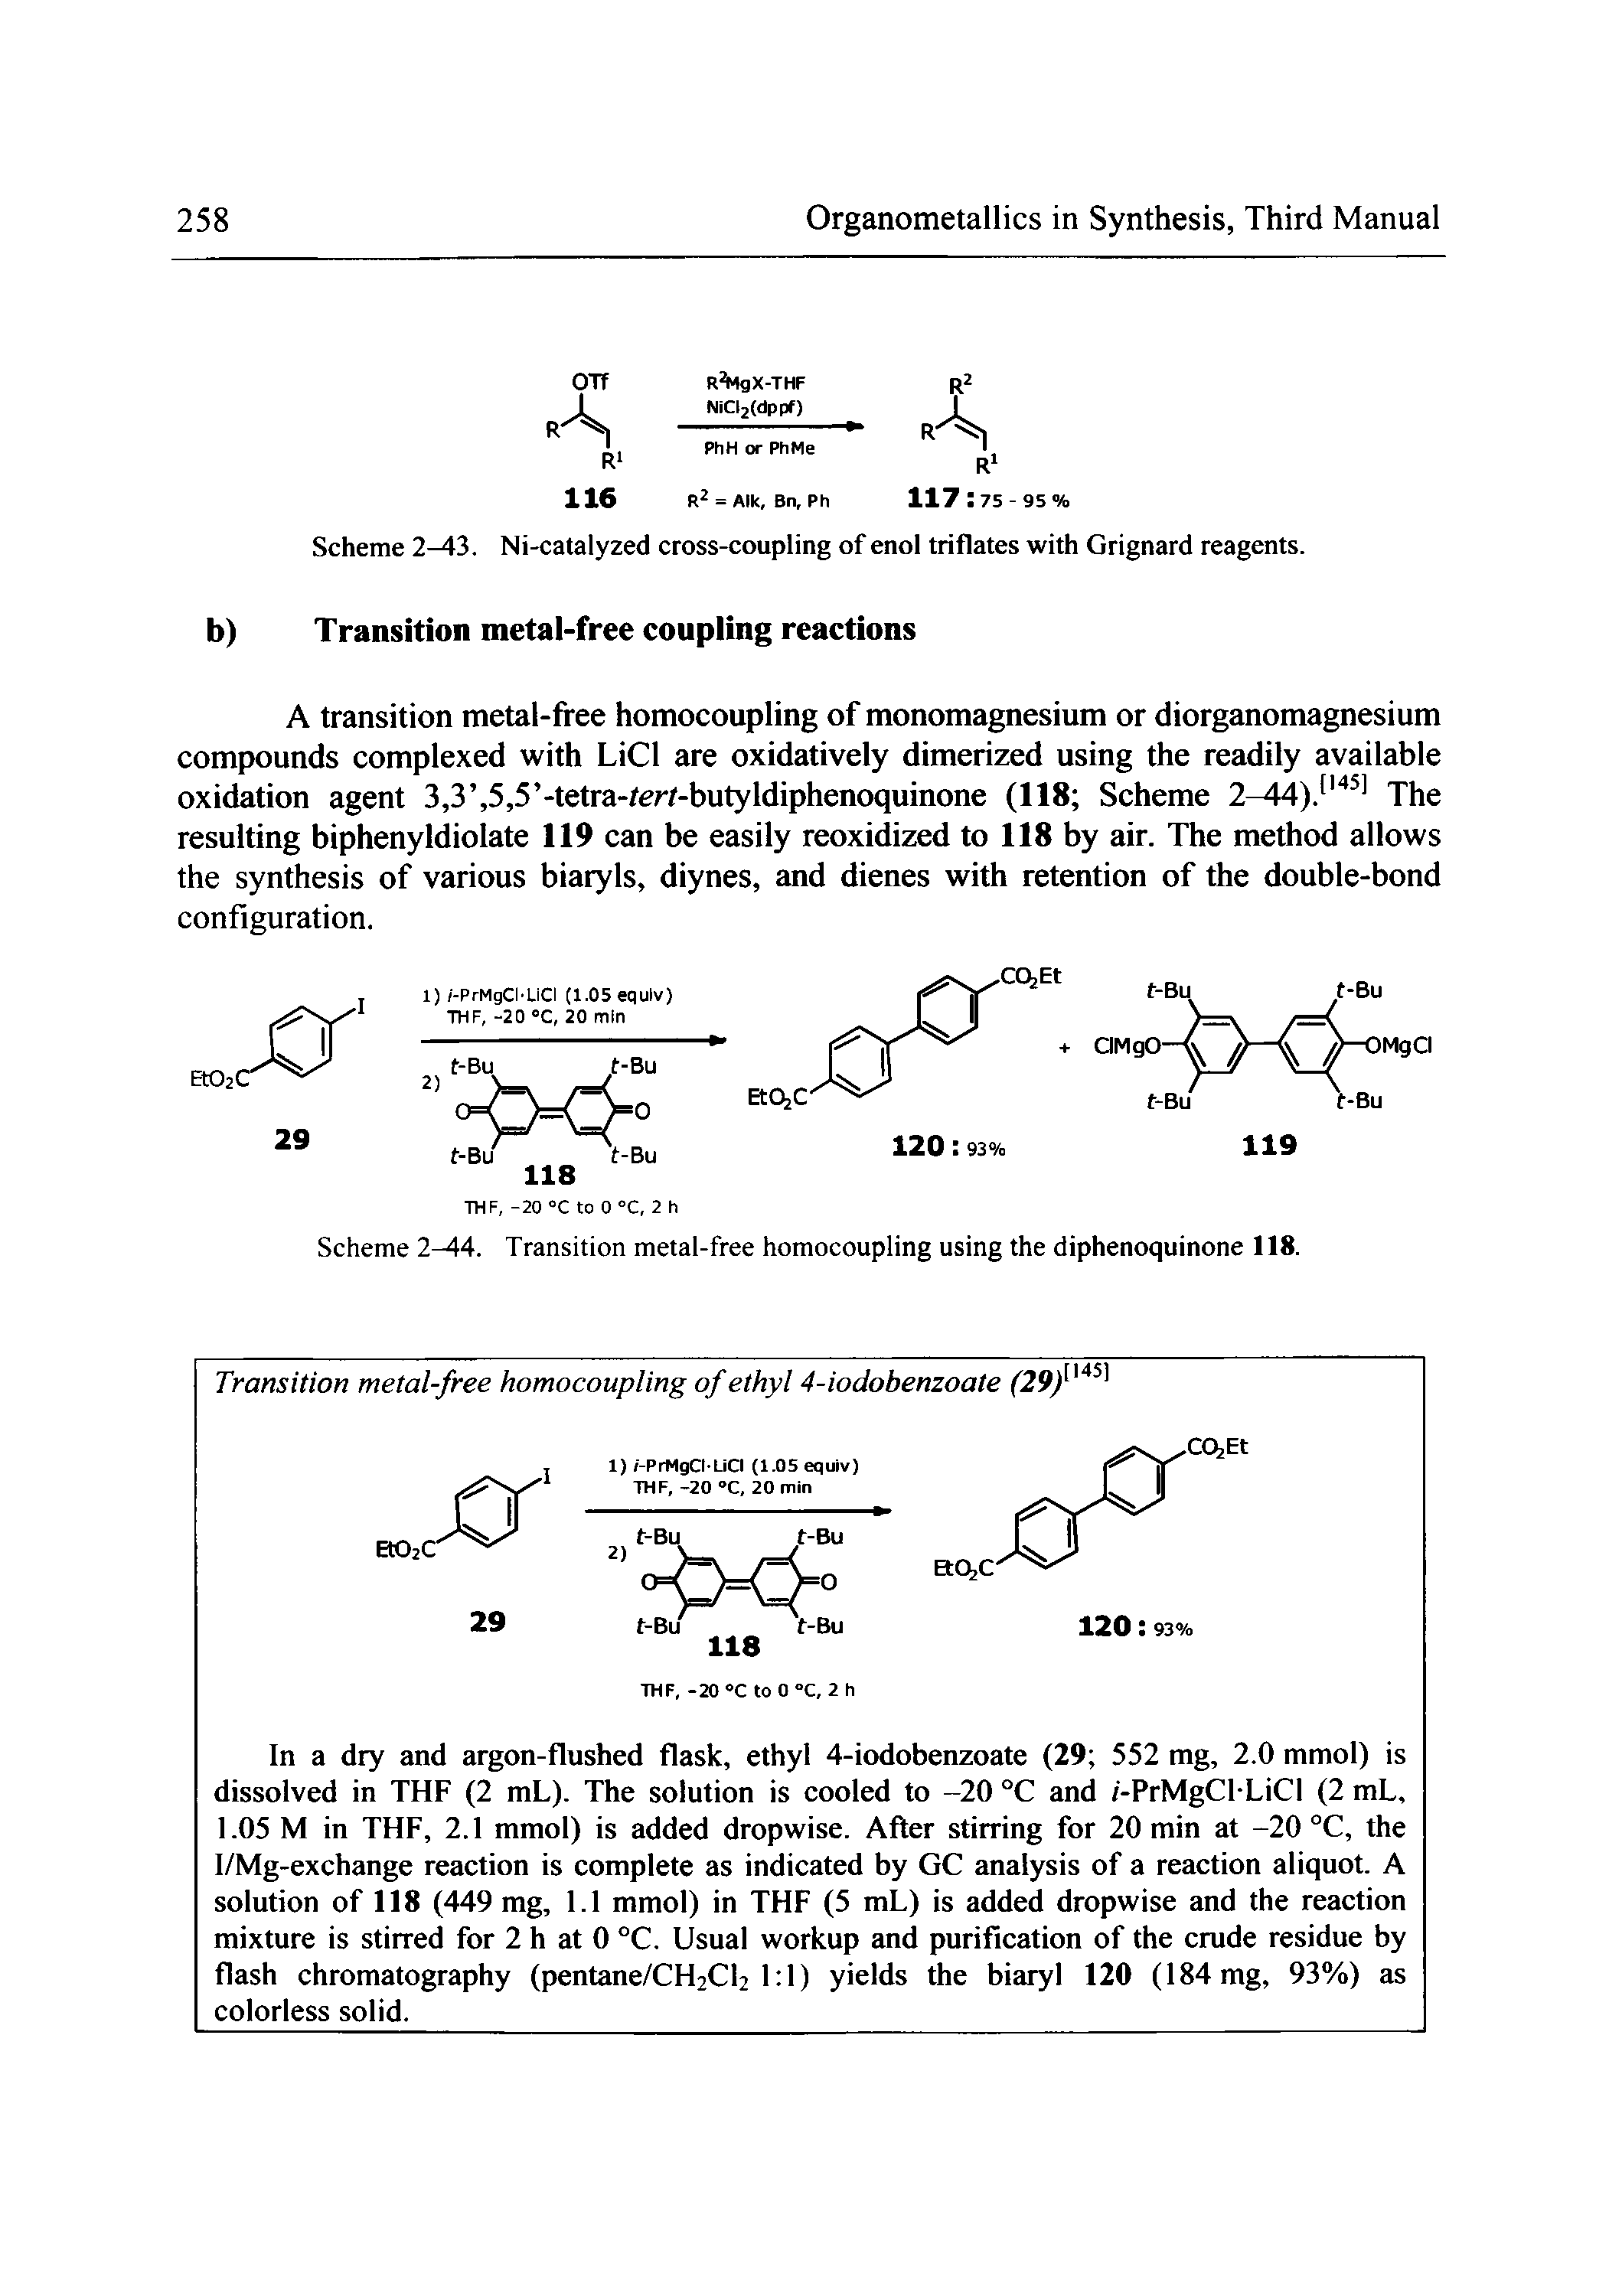 Scheme 2-44. Transition metal-free homocoupling using the diphenoquinone 118.